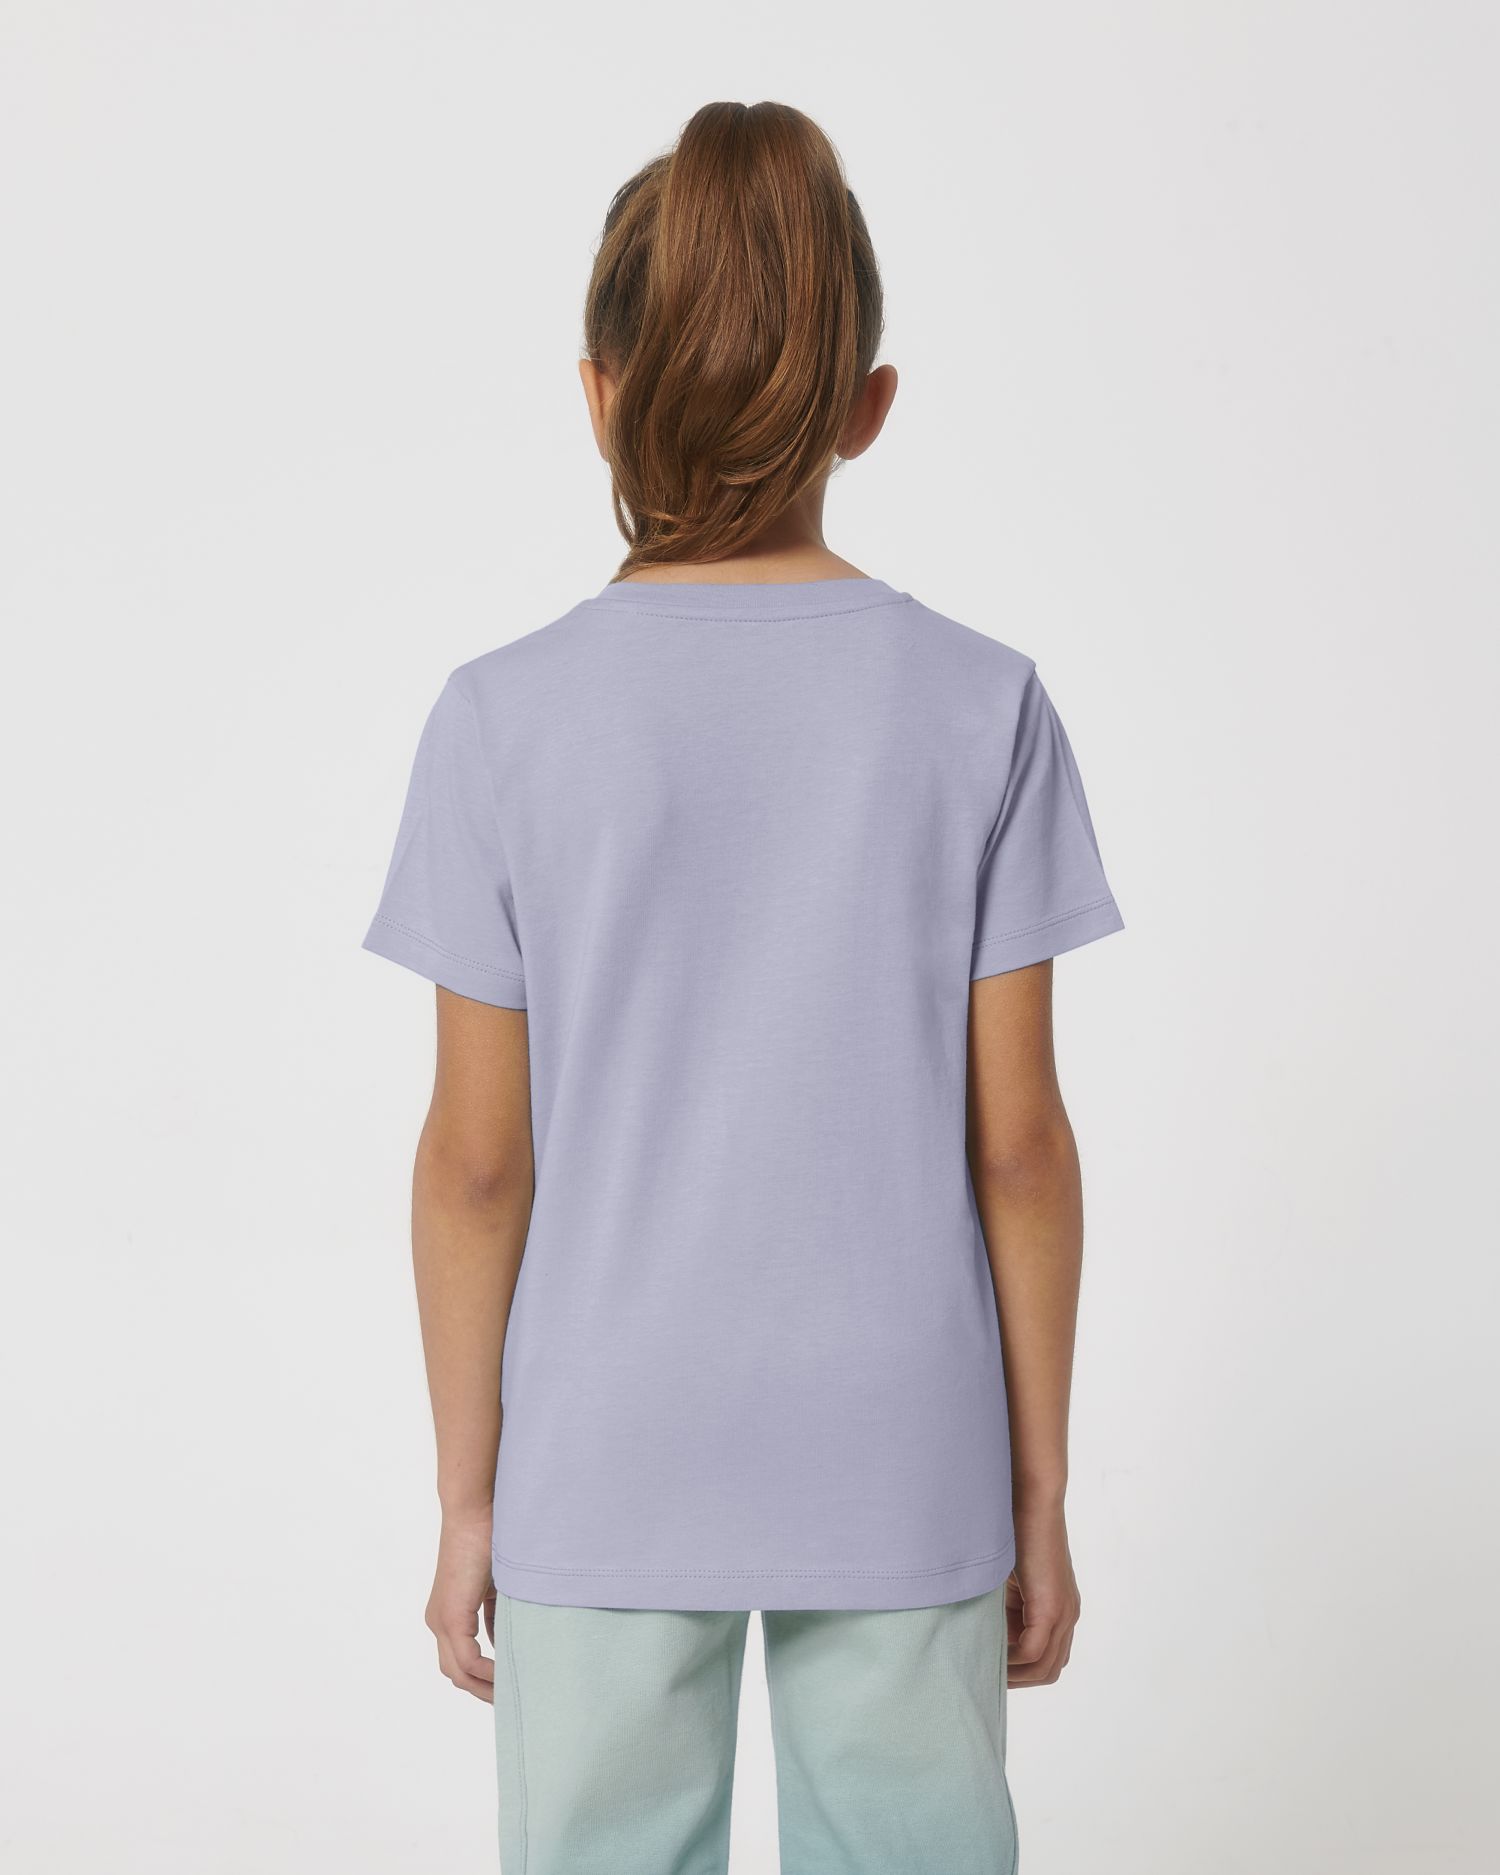 Kids T-Shirt Mini Creator in Farbe Lavender